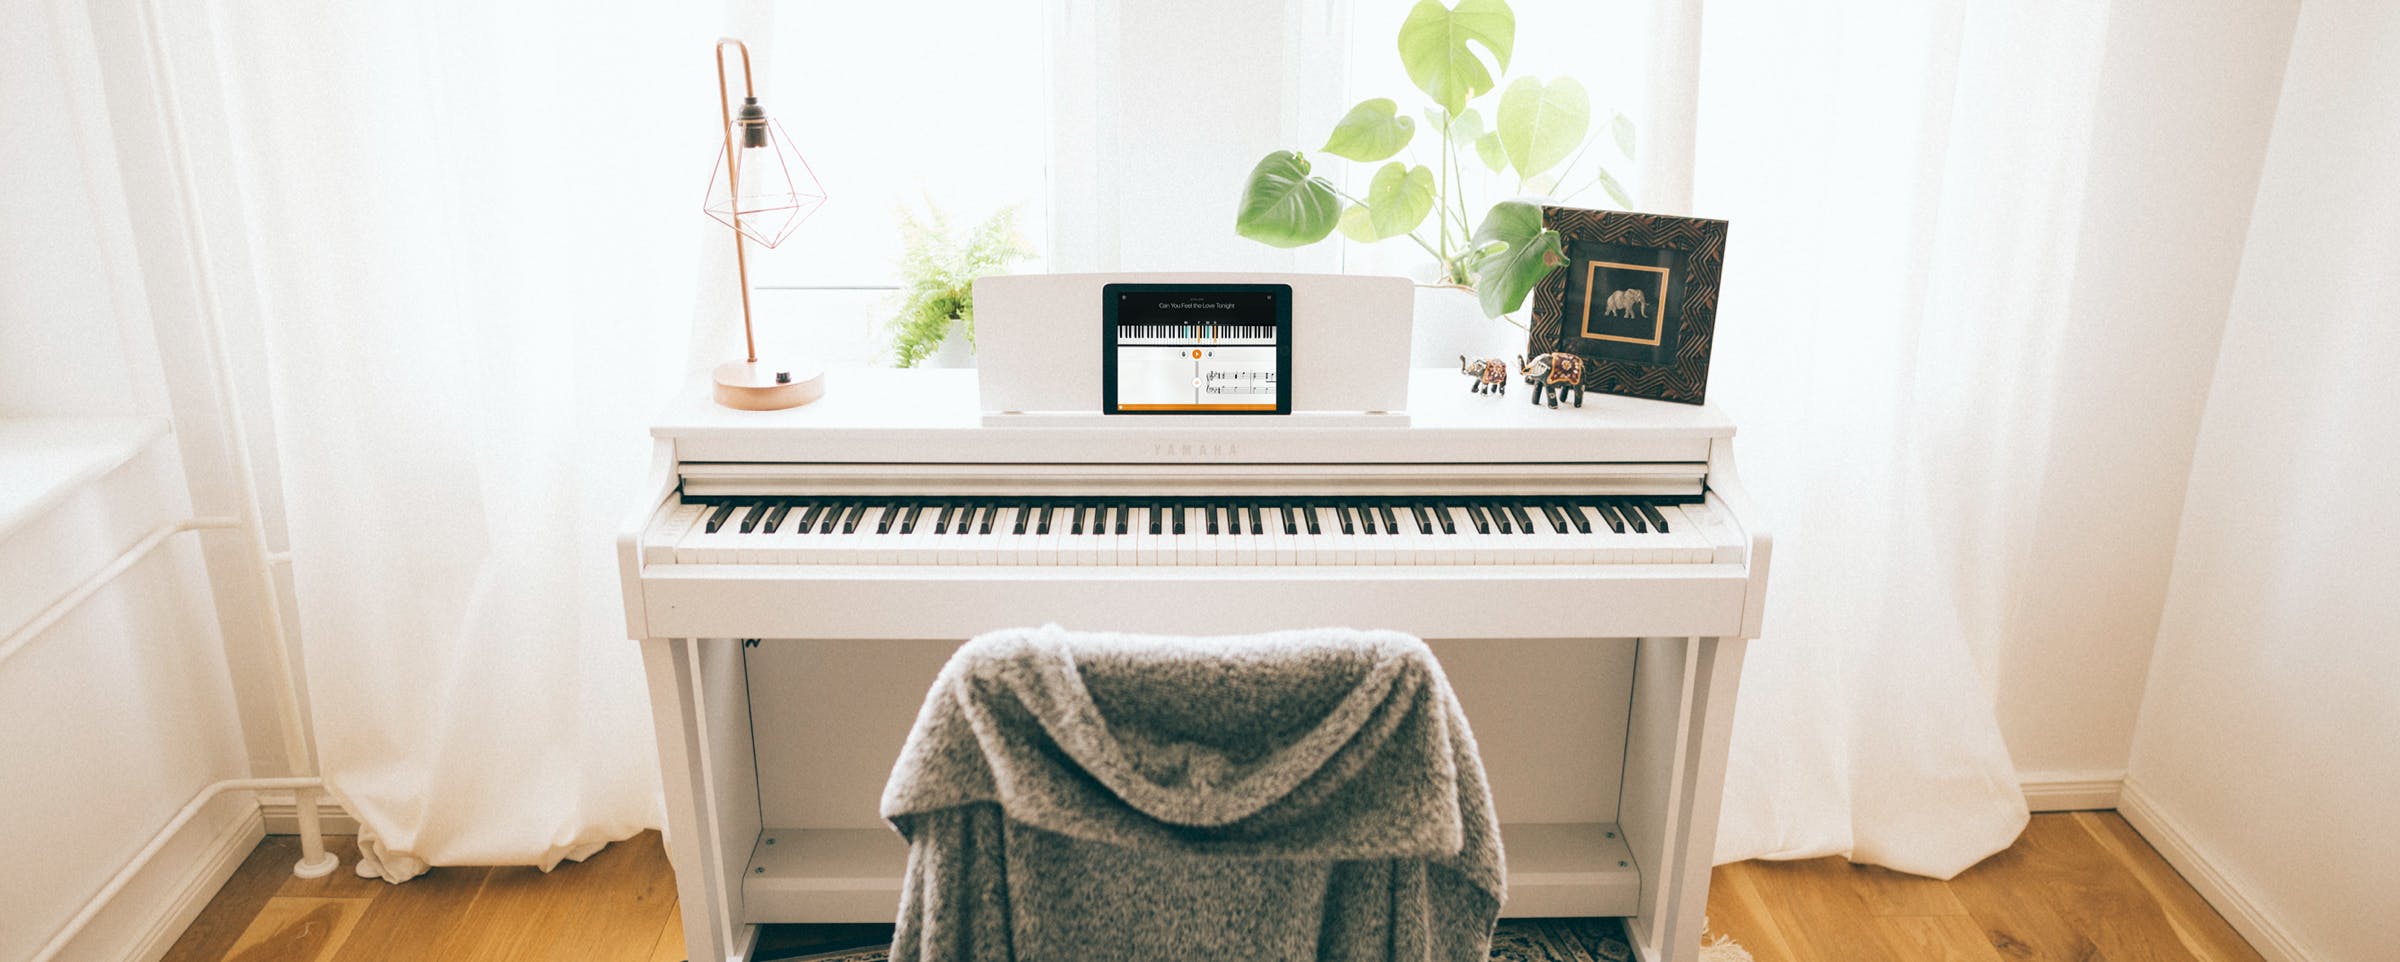 Pianoforte Yamaha bianco con un iPad